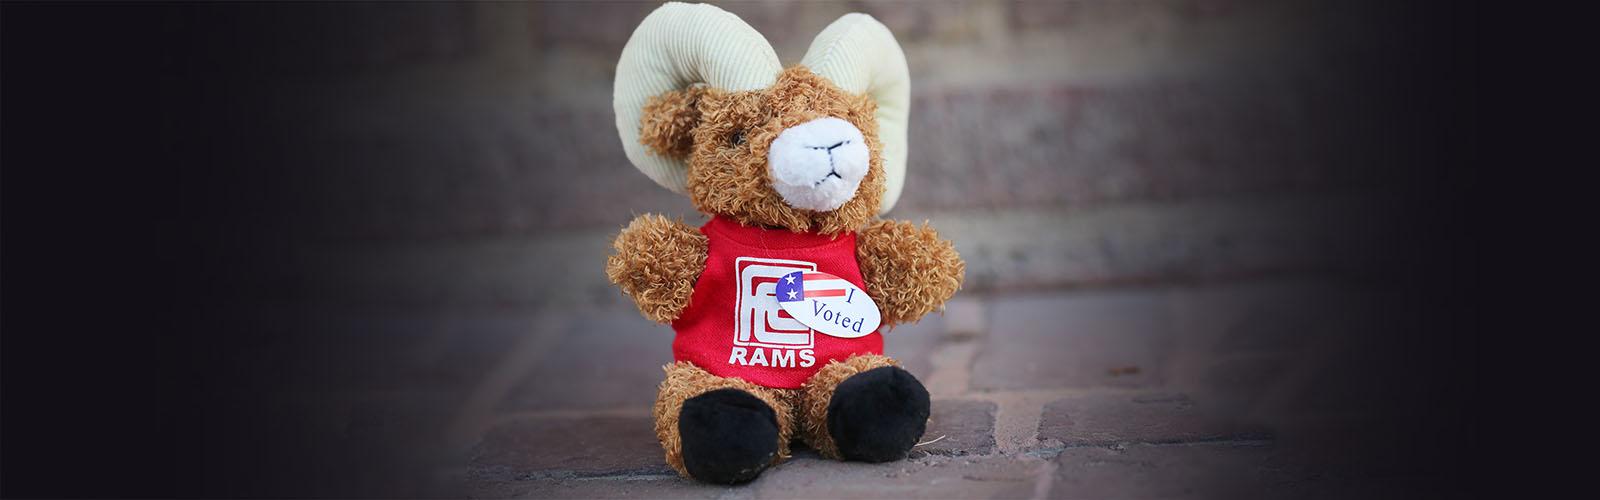 Sam the Ram mascot with I Voted sticker